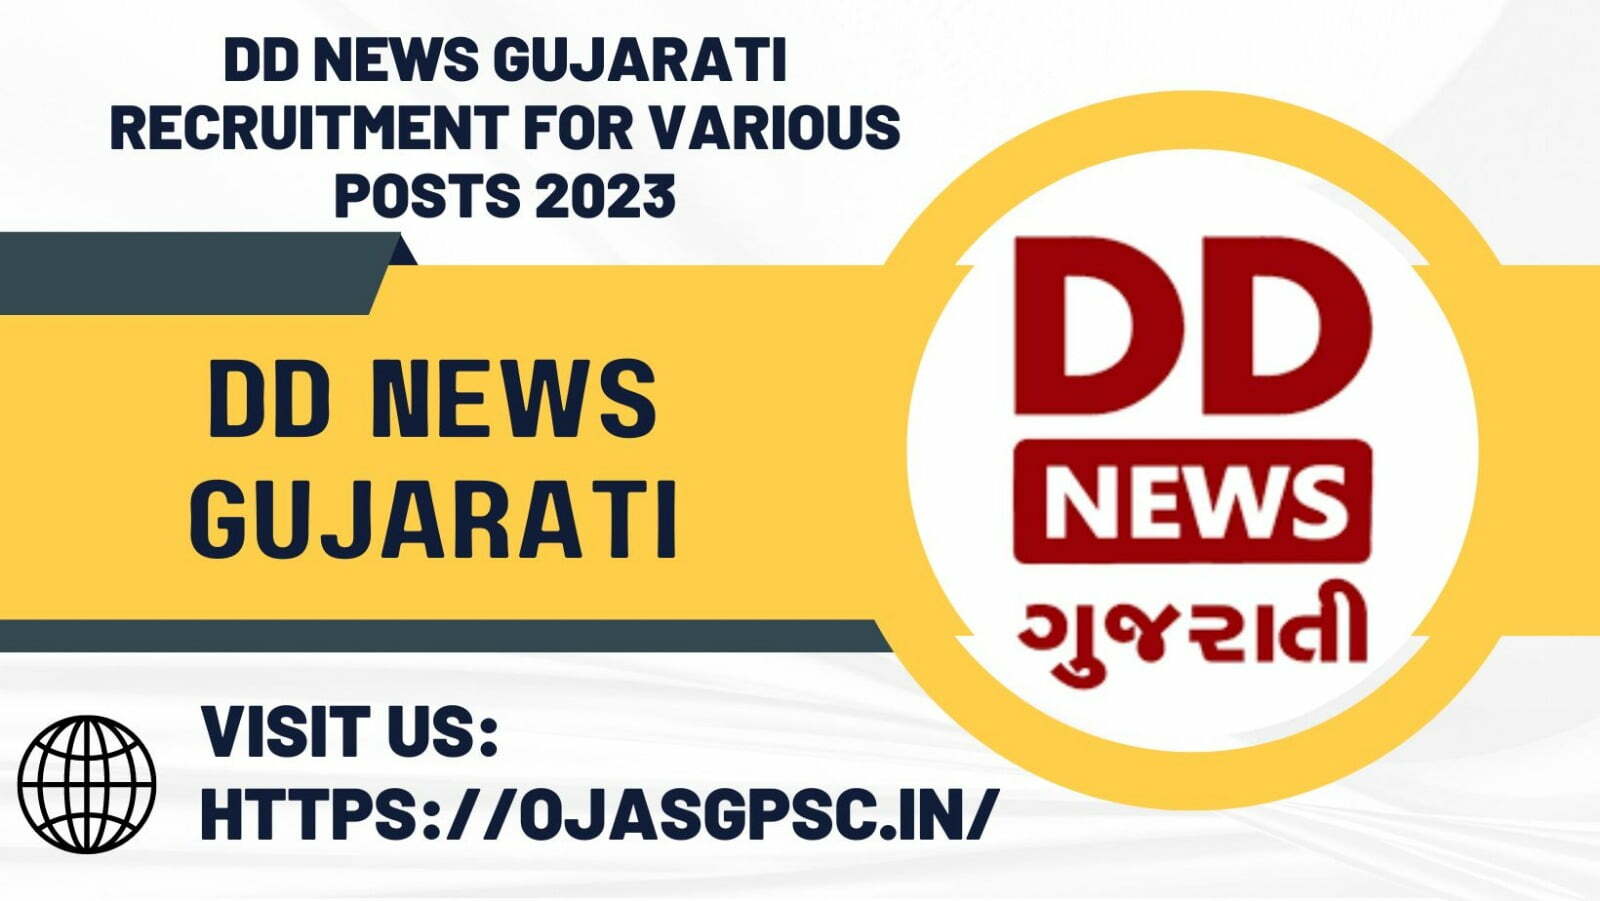 DD News Gujarati Recruitment for Various Posts 2023